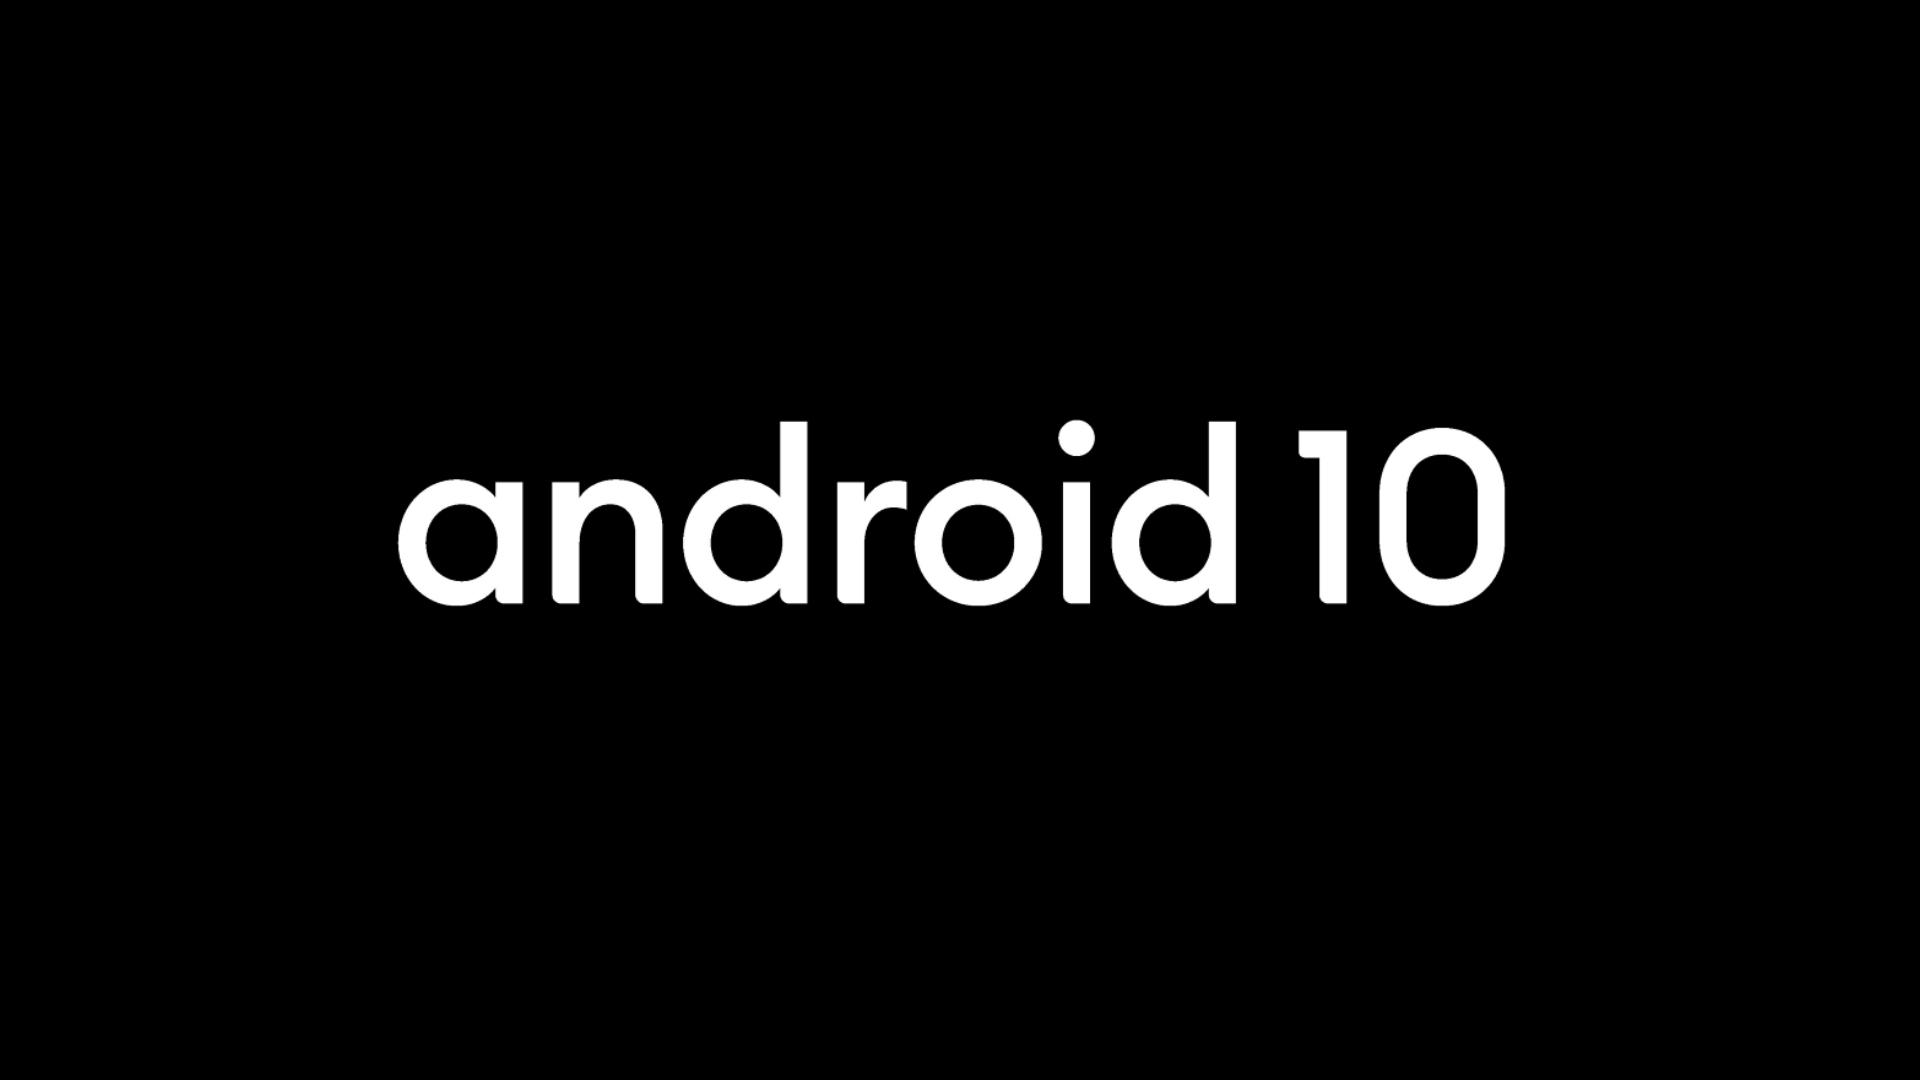 new android logo wordmark 2019